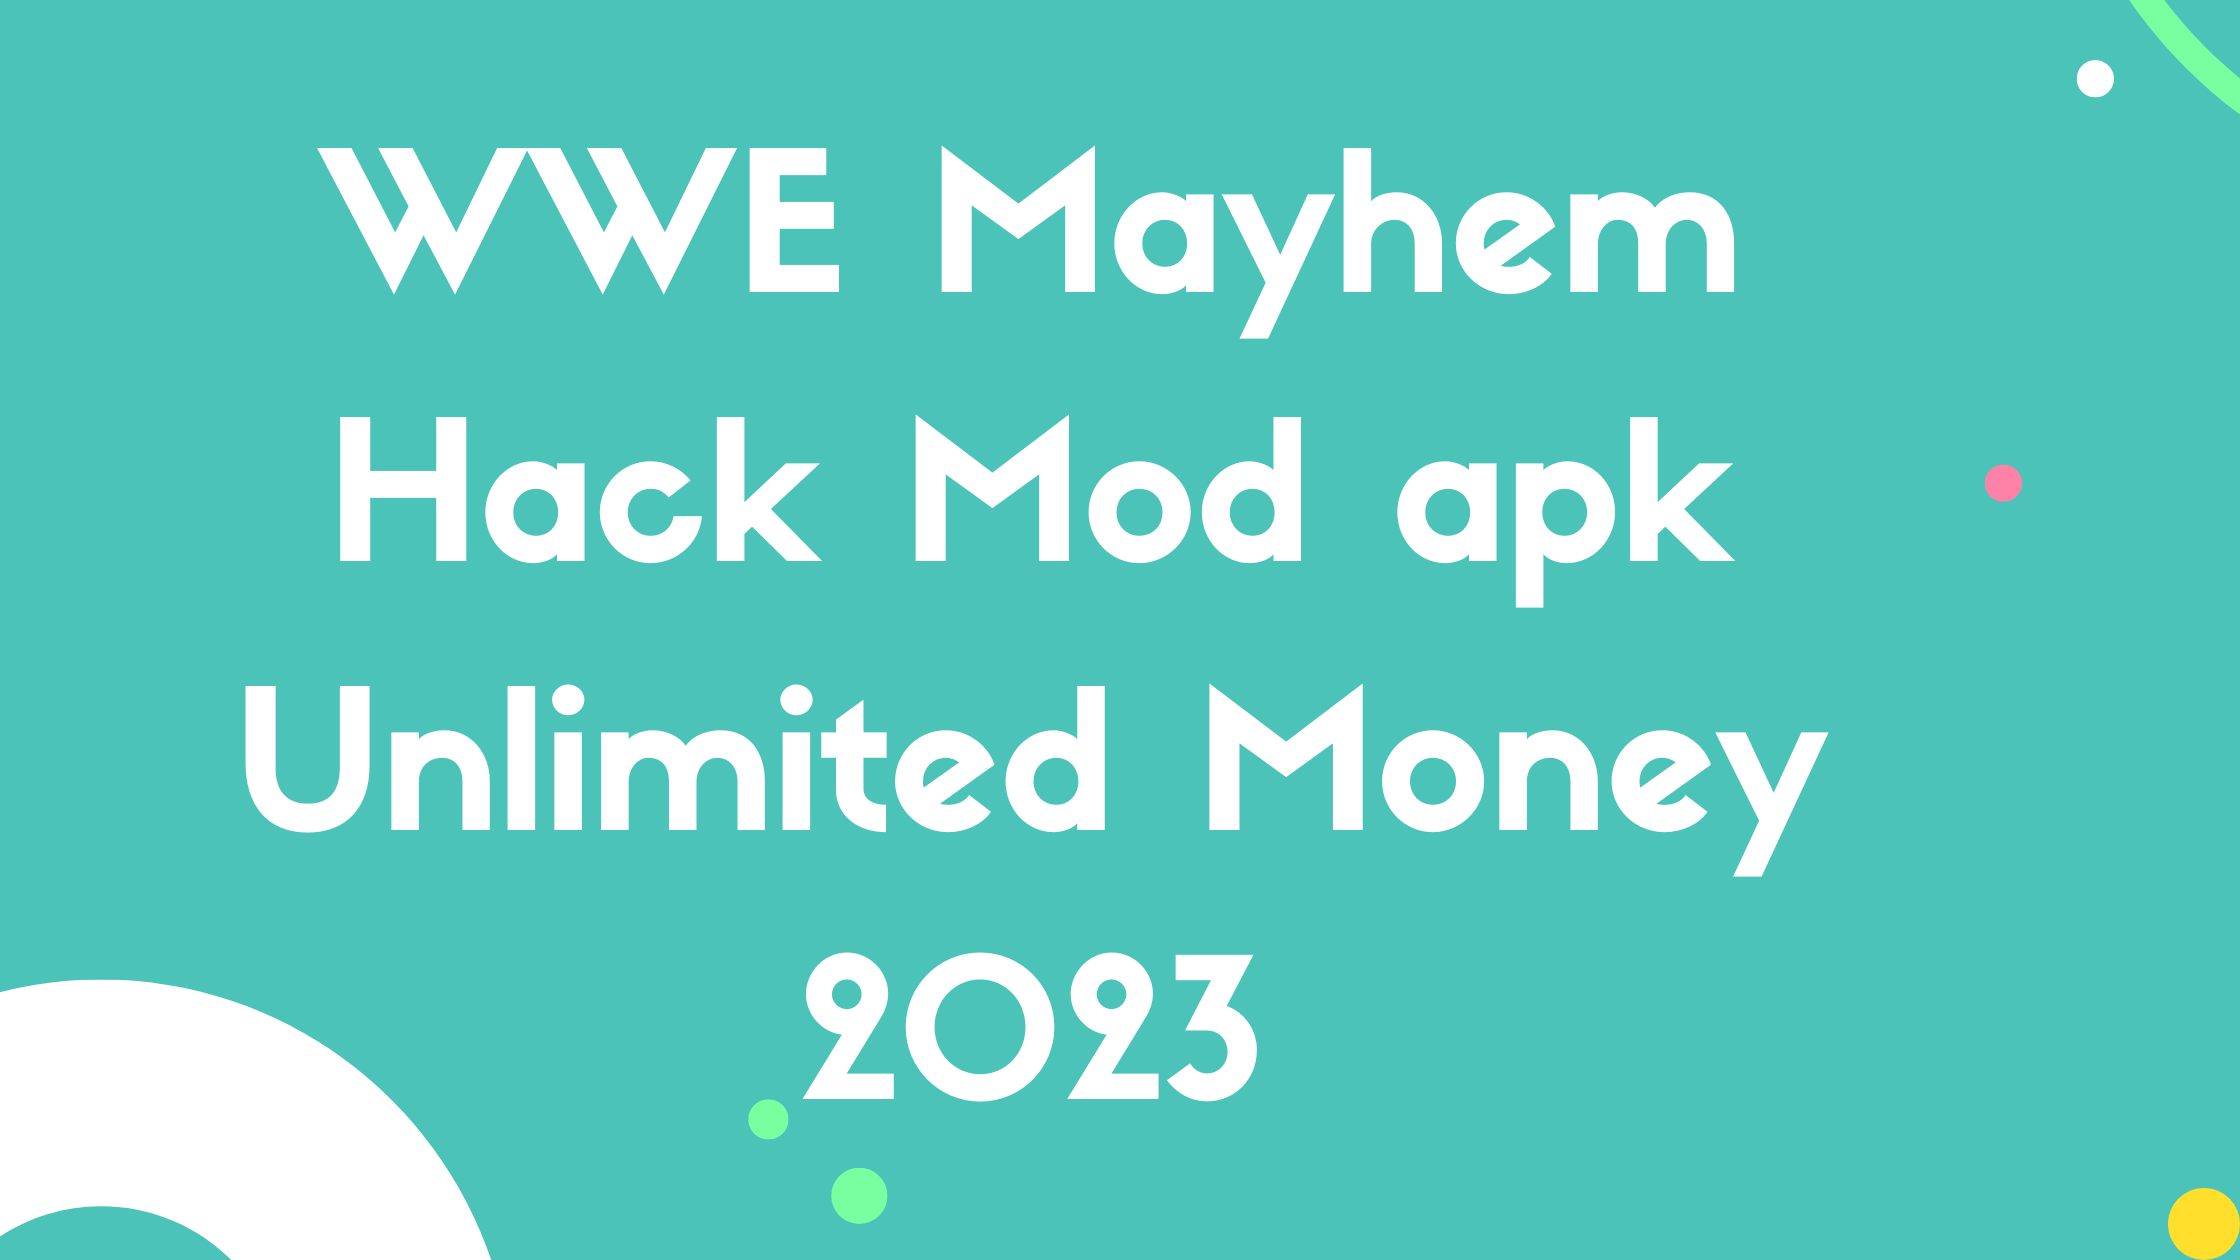 WWE Mayhem Hack Mod apk Unlimited Money 2023